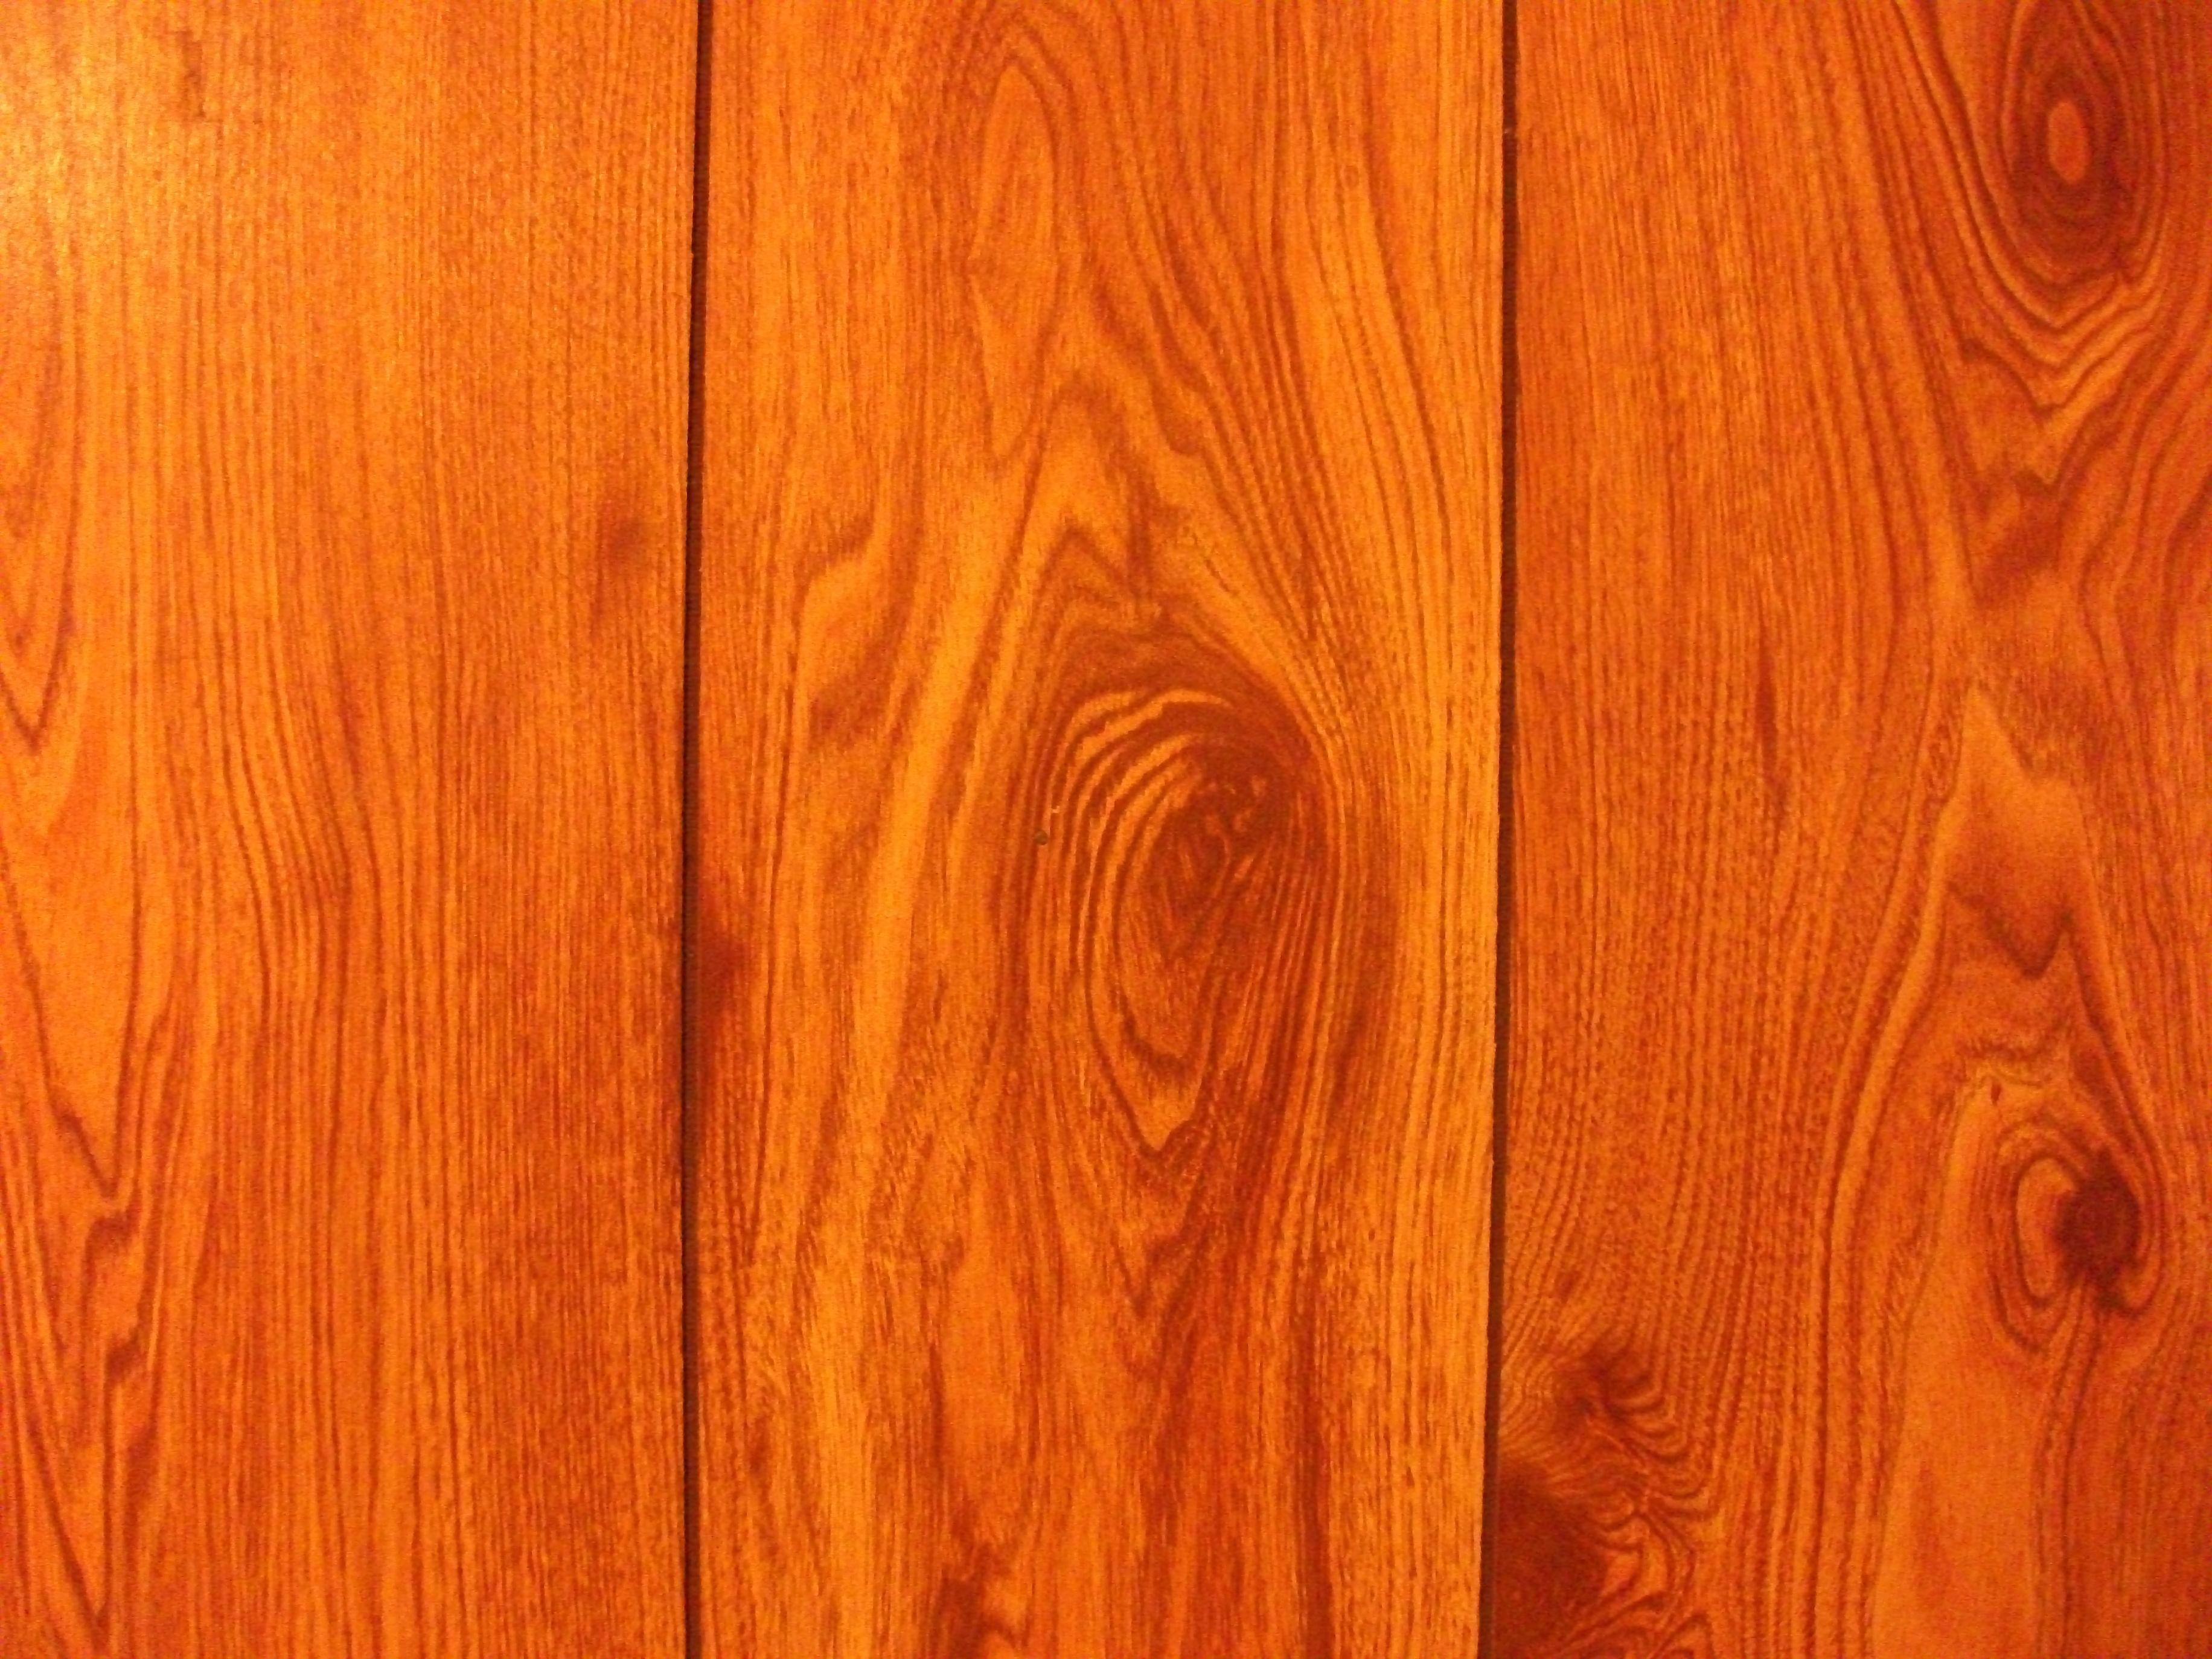 Orange Wood Wallpapers - Top Free Orange Wood Backgrounds ...